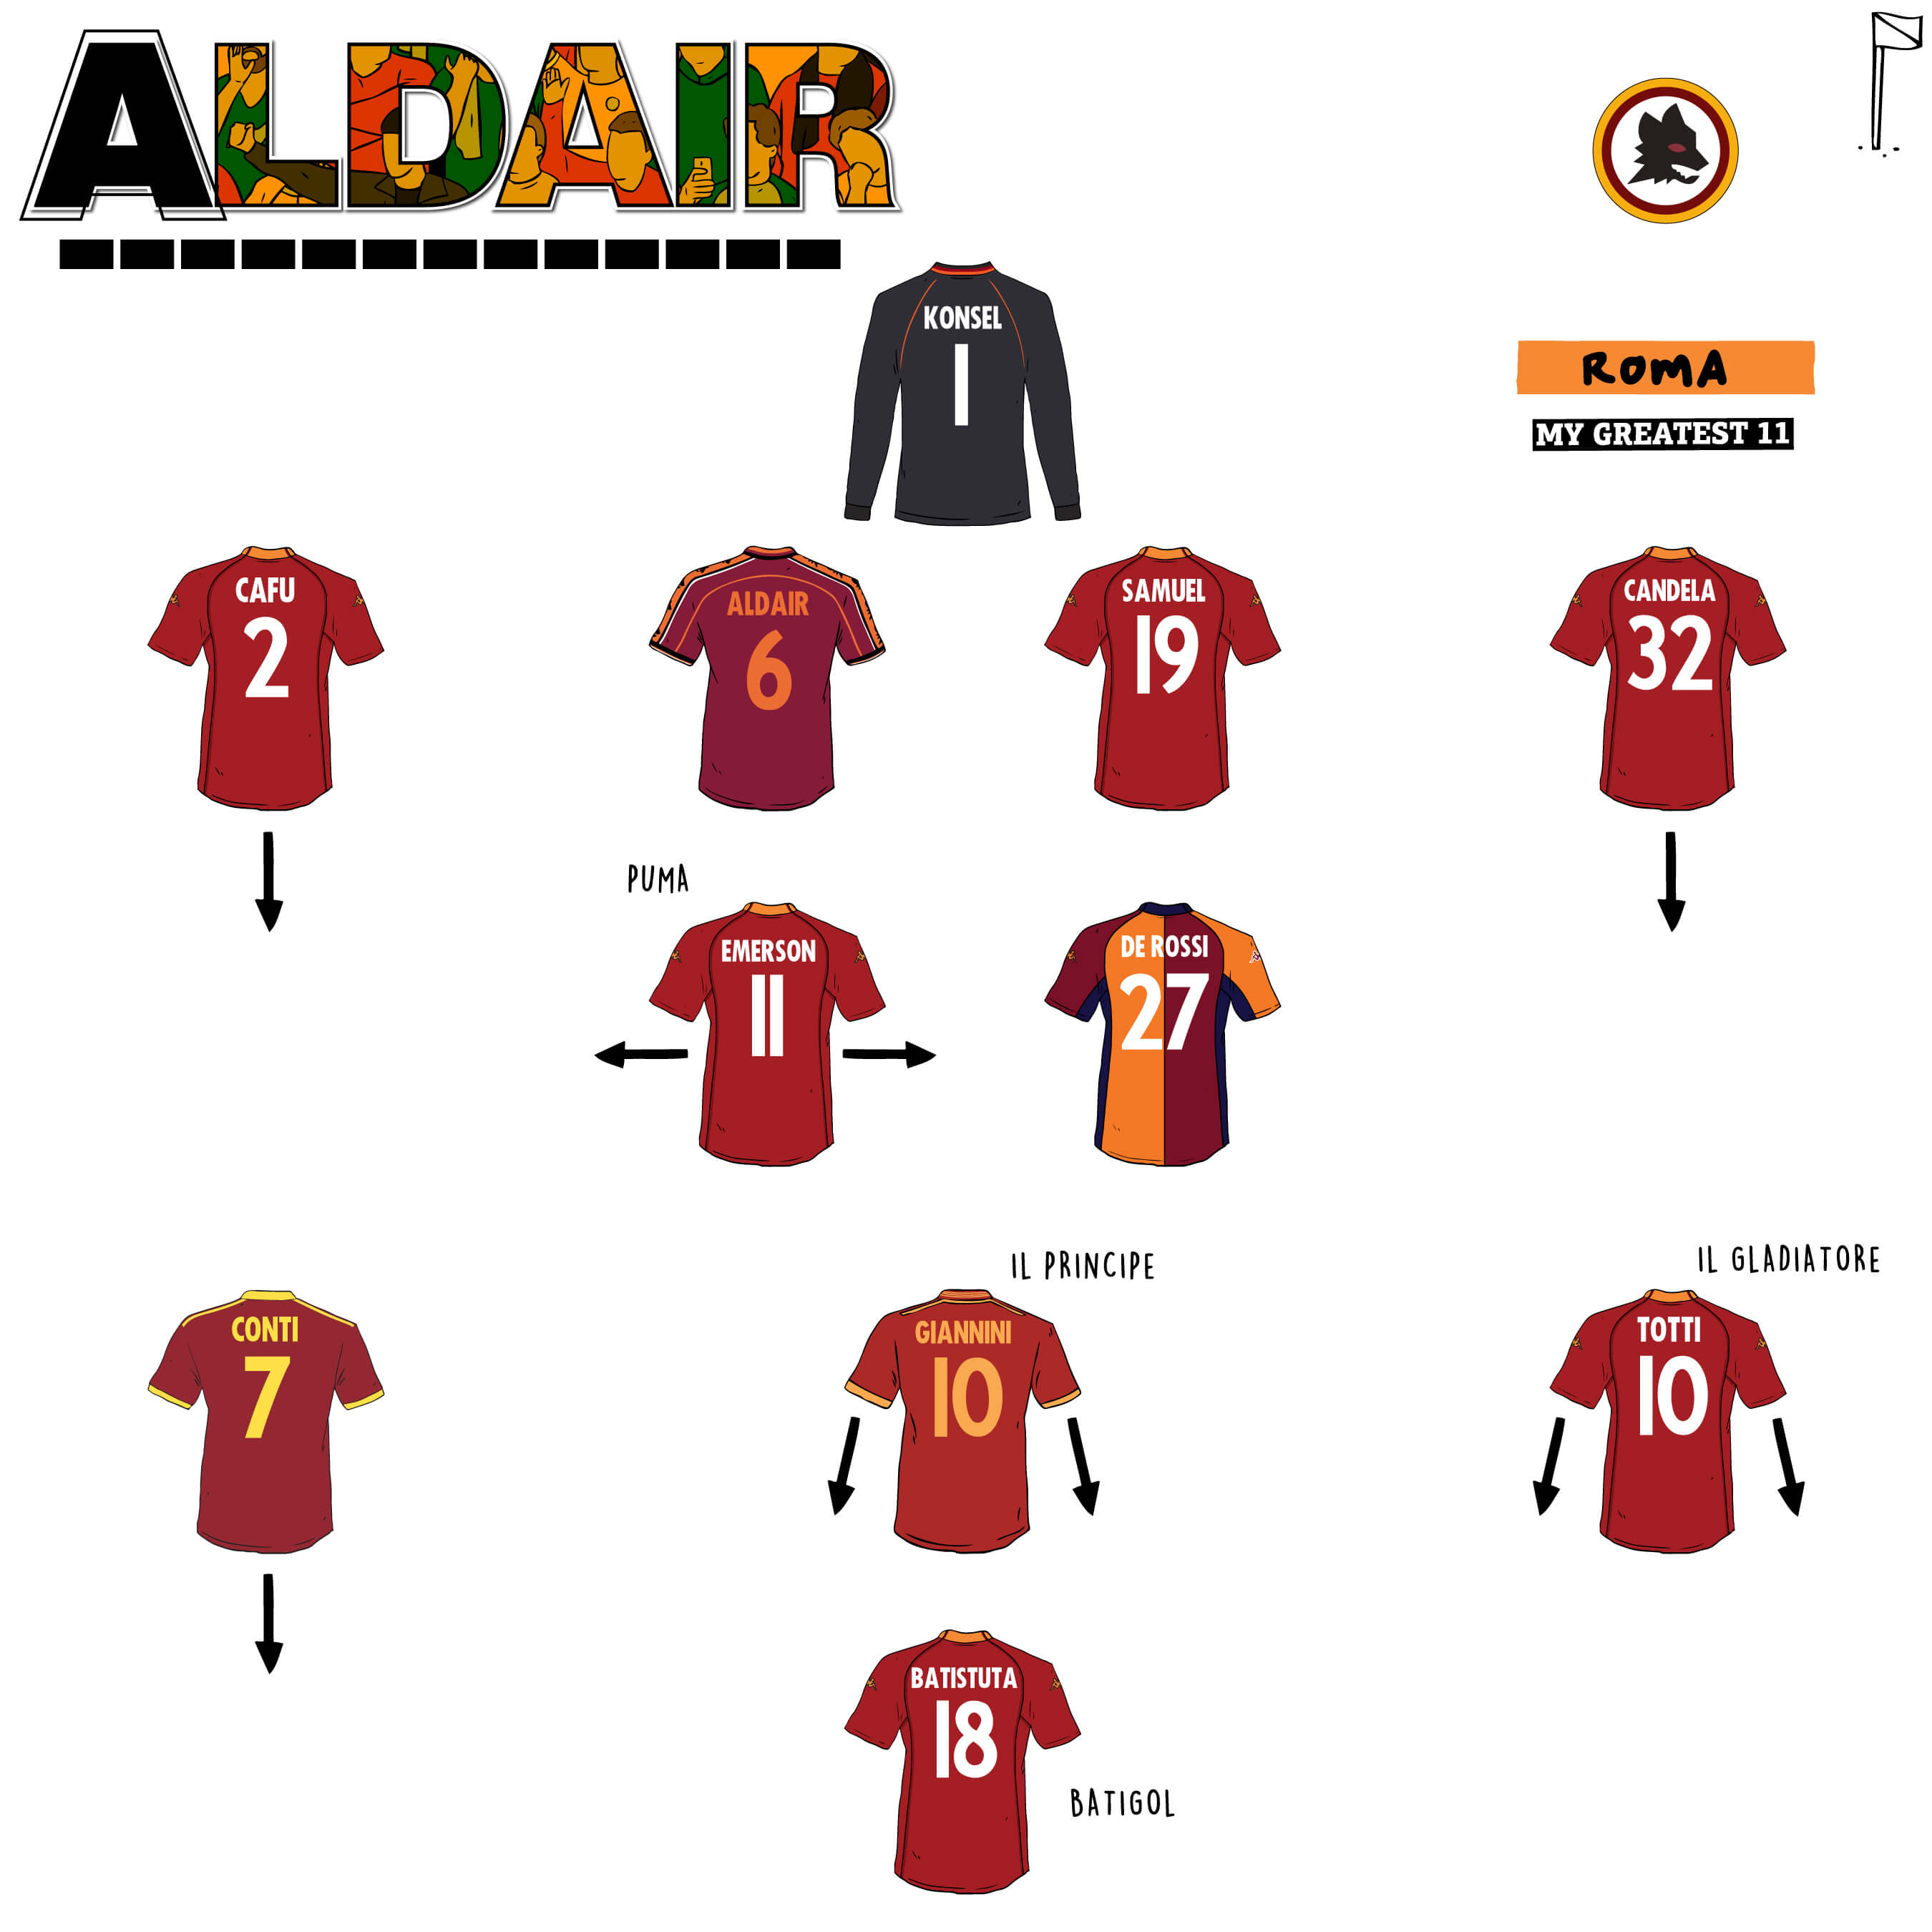 Aldiar picks his Greatest Roma 11